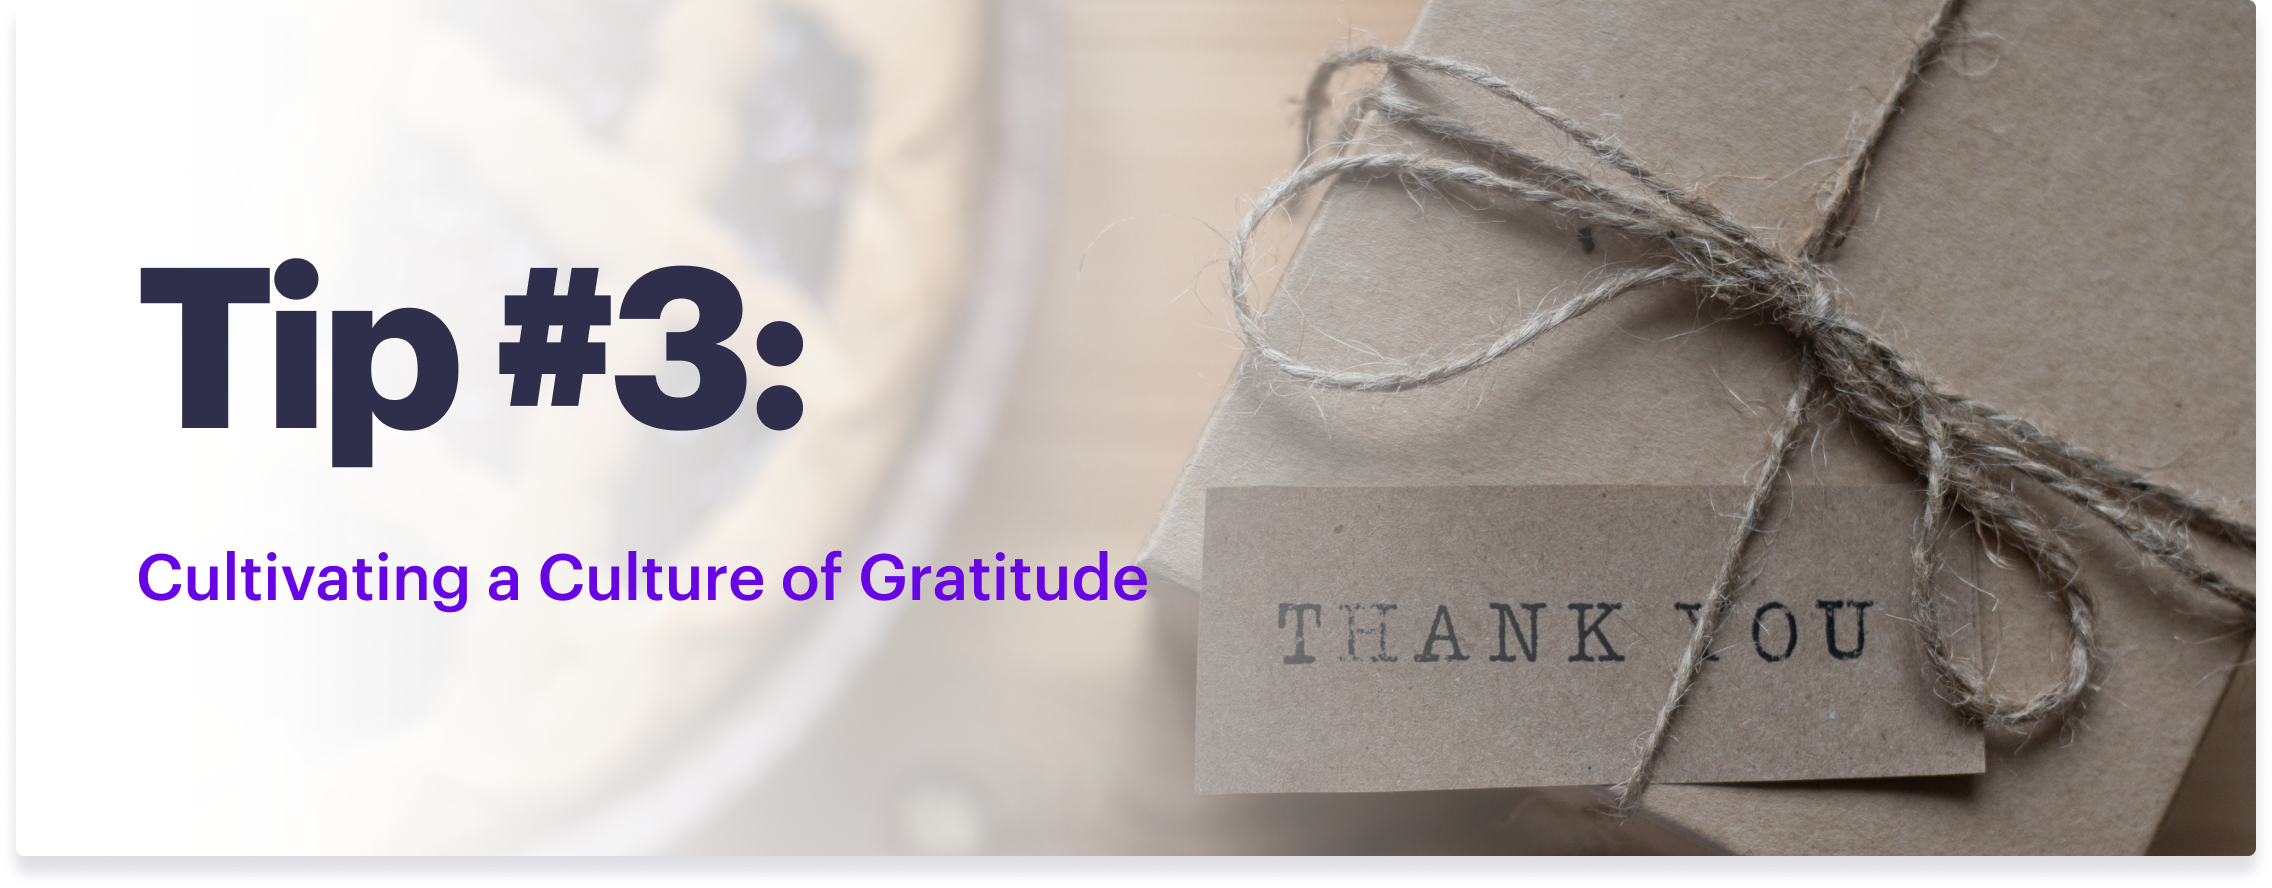 Tip #3: Cultivating a Culture of Gratitude